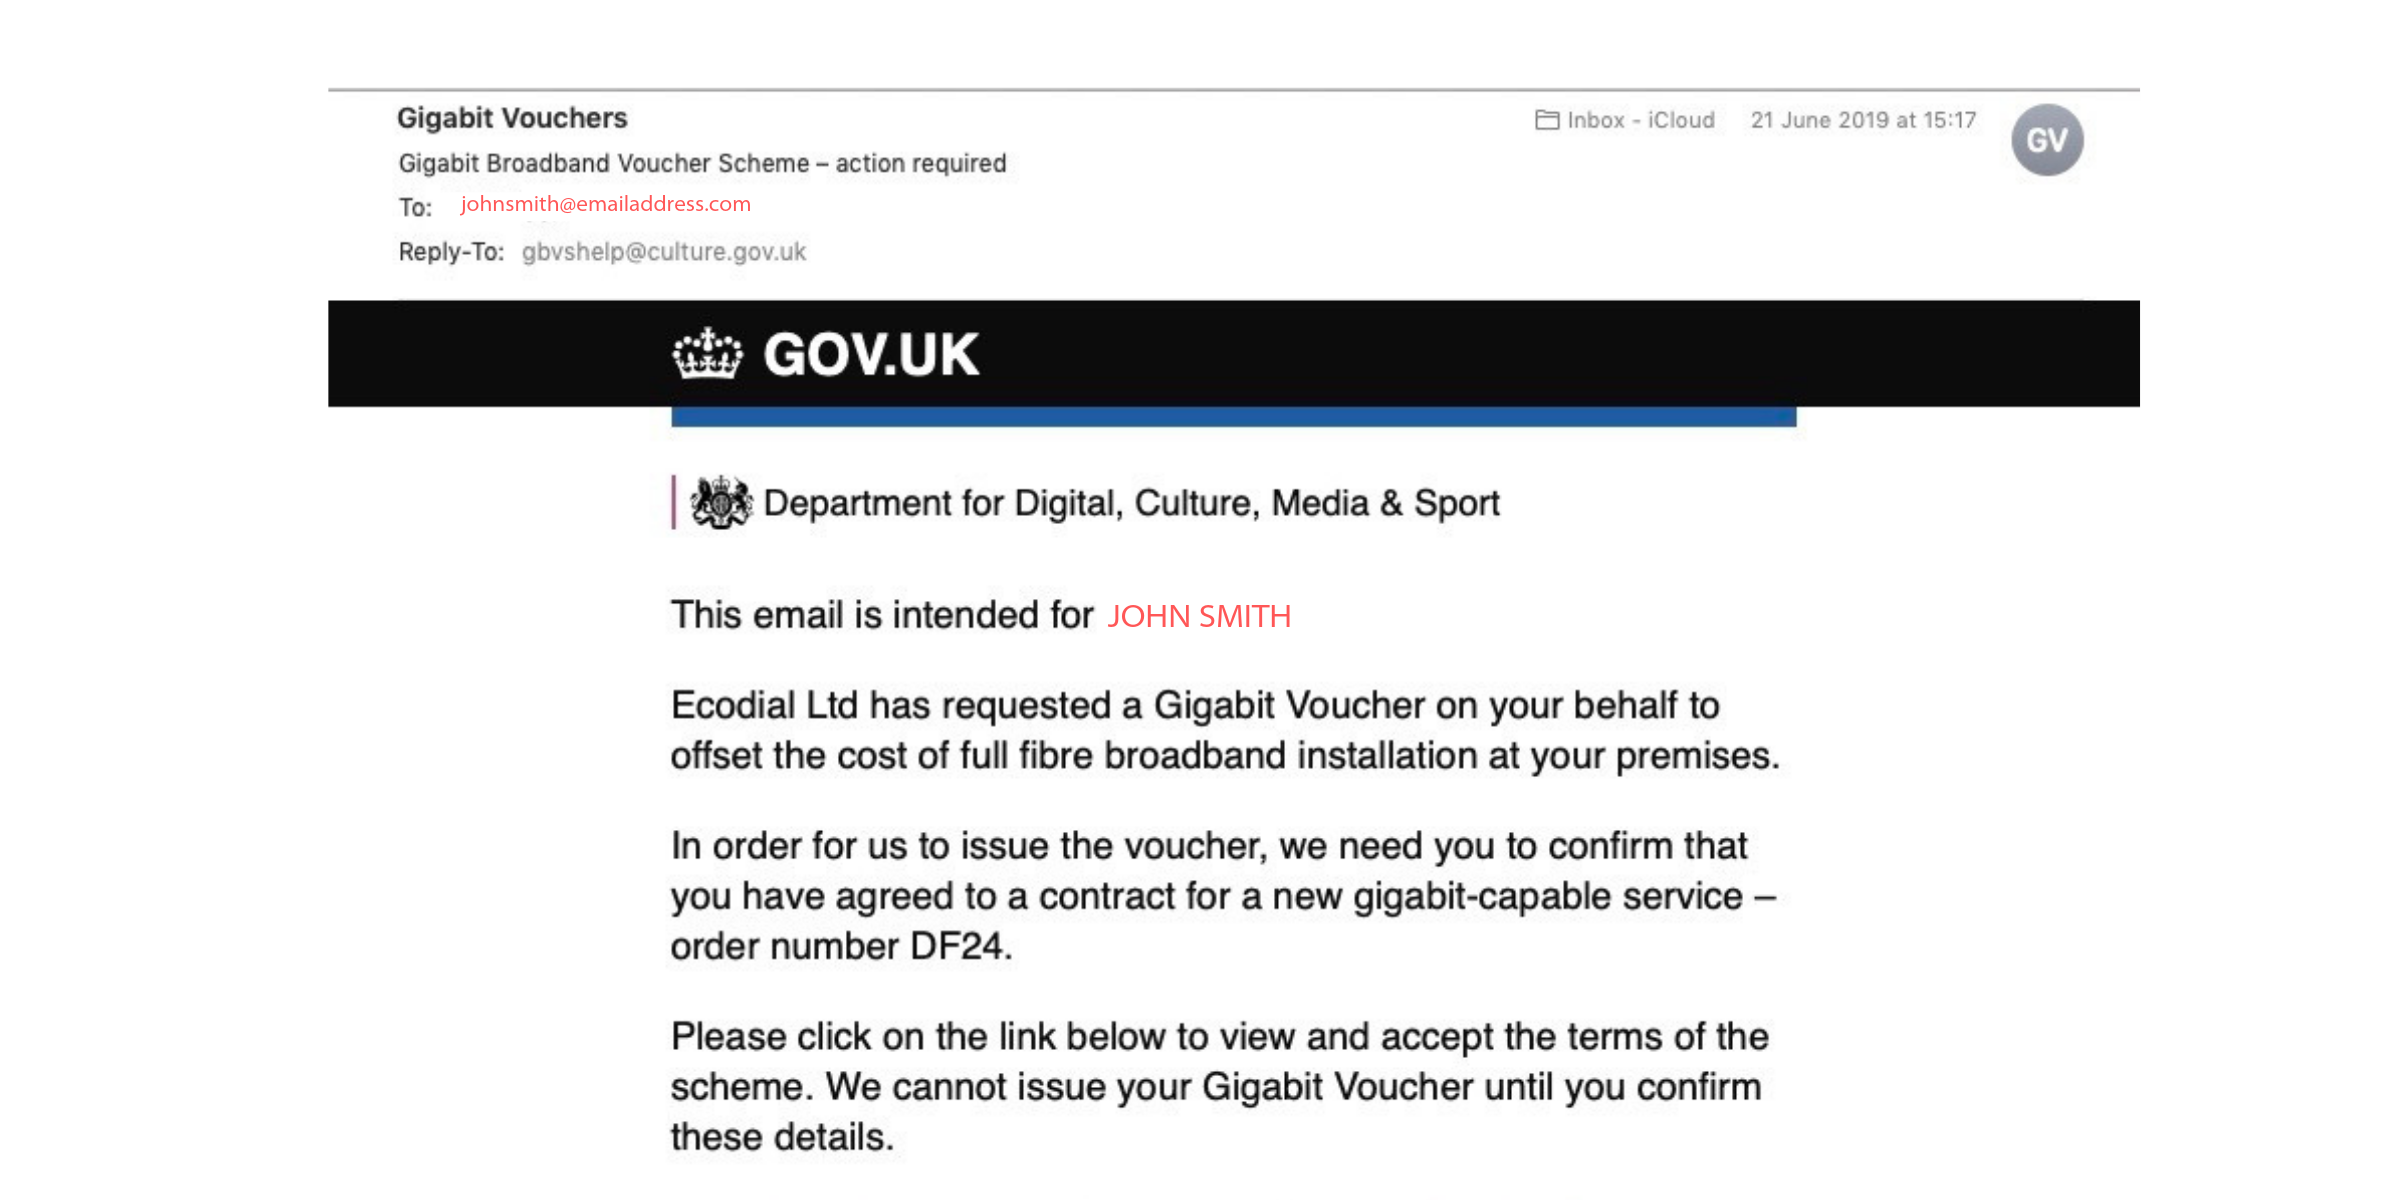 Gigabit Broadband Voucher Scheme email example.